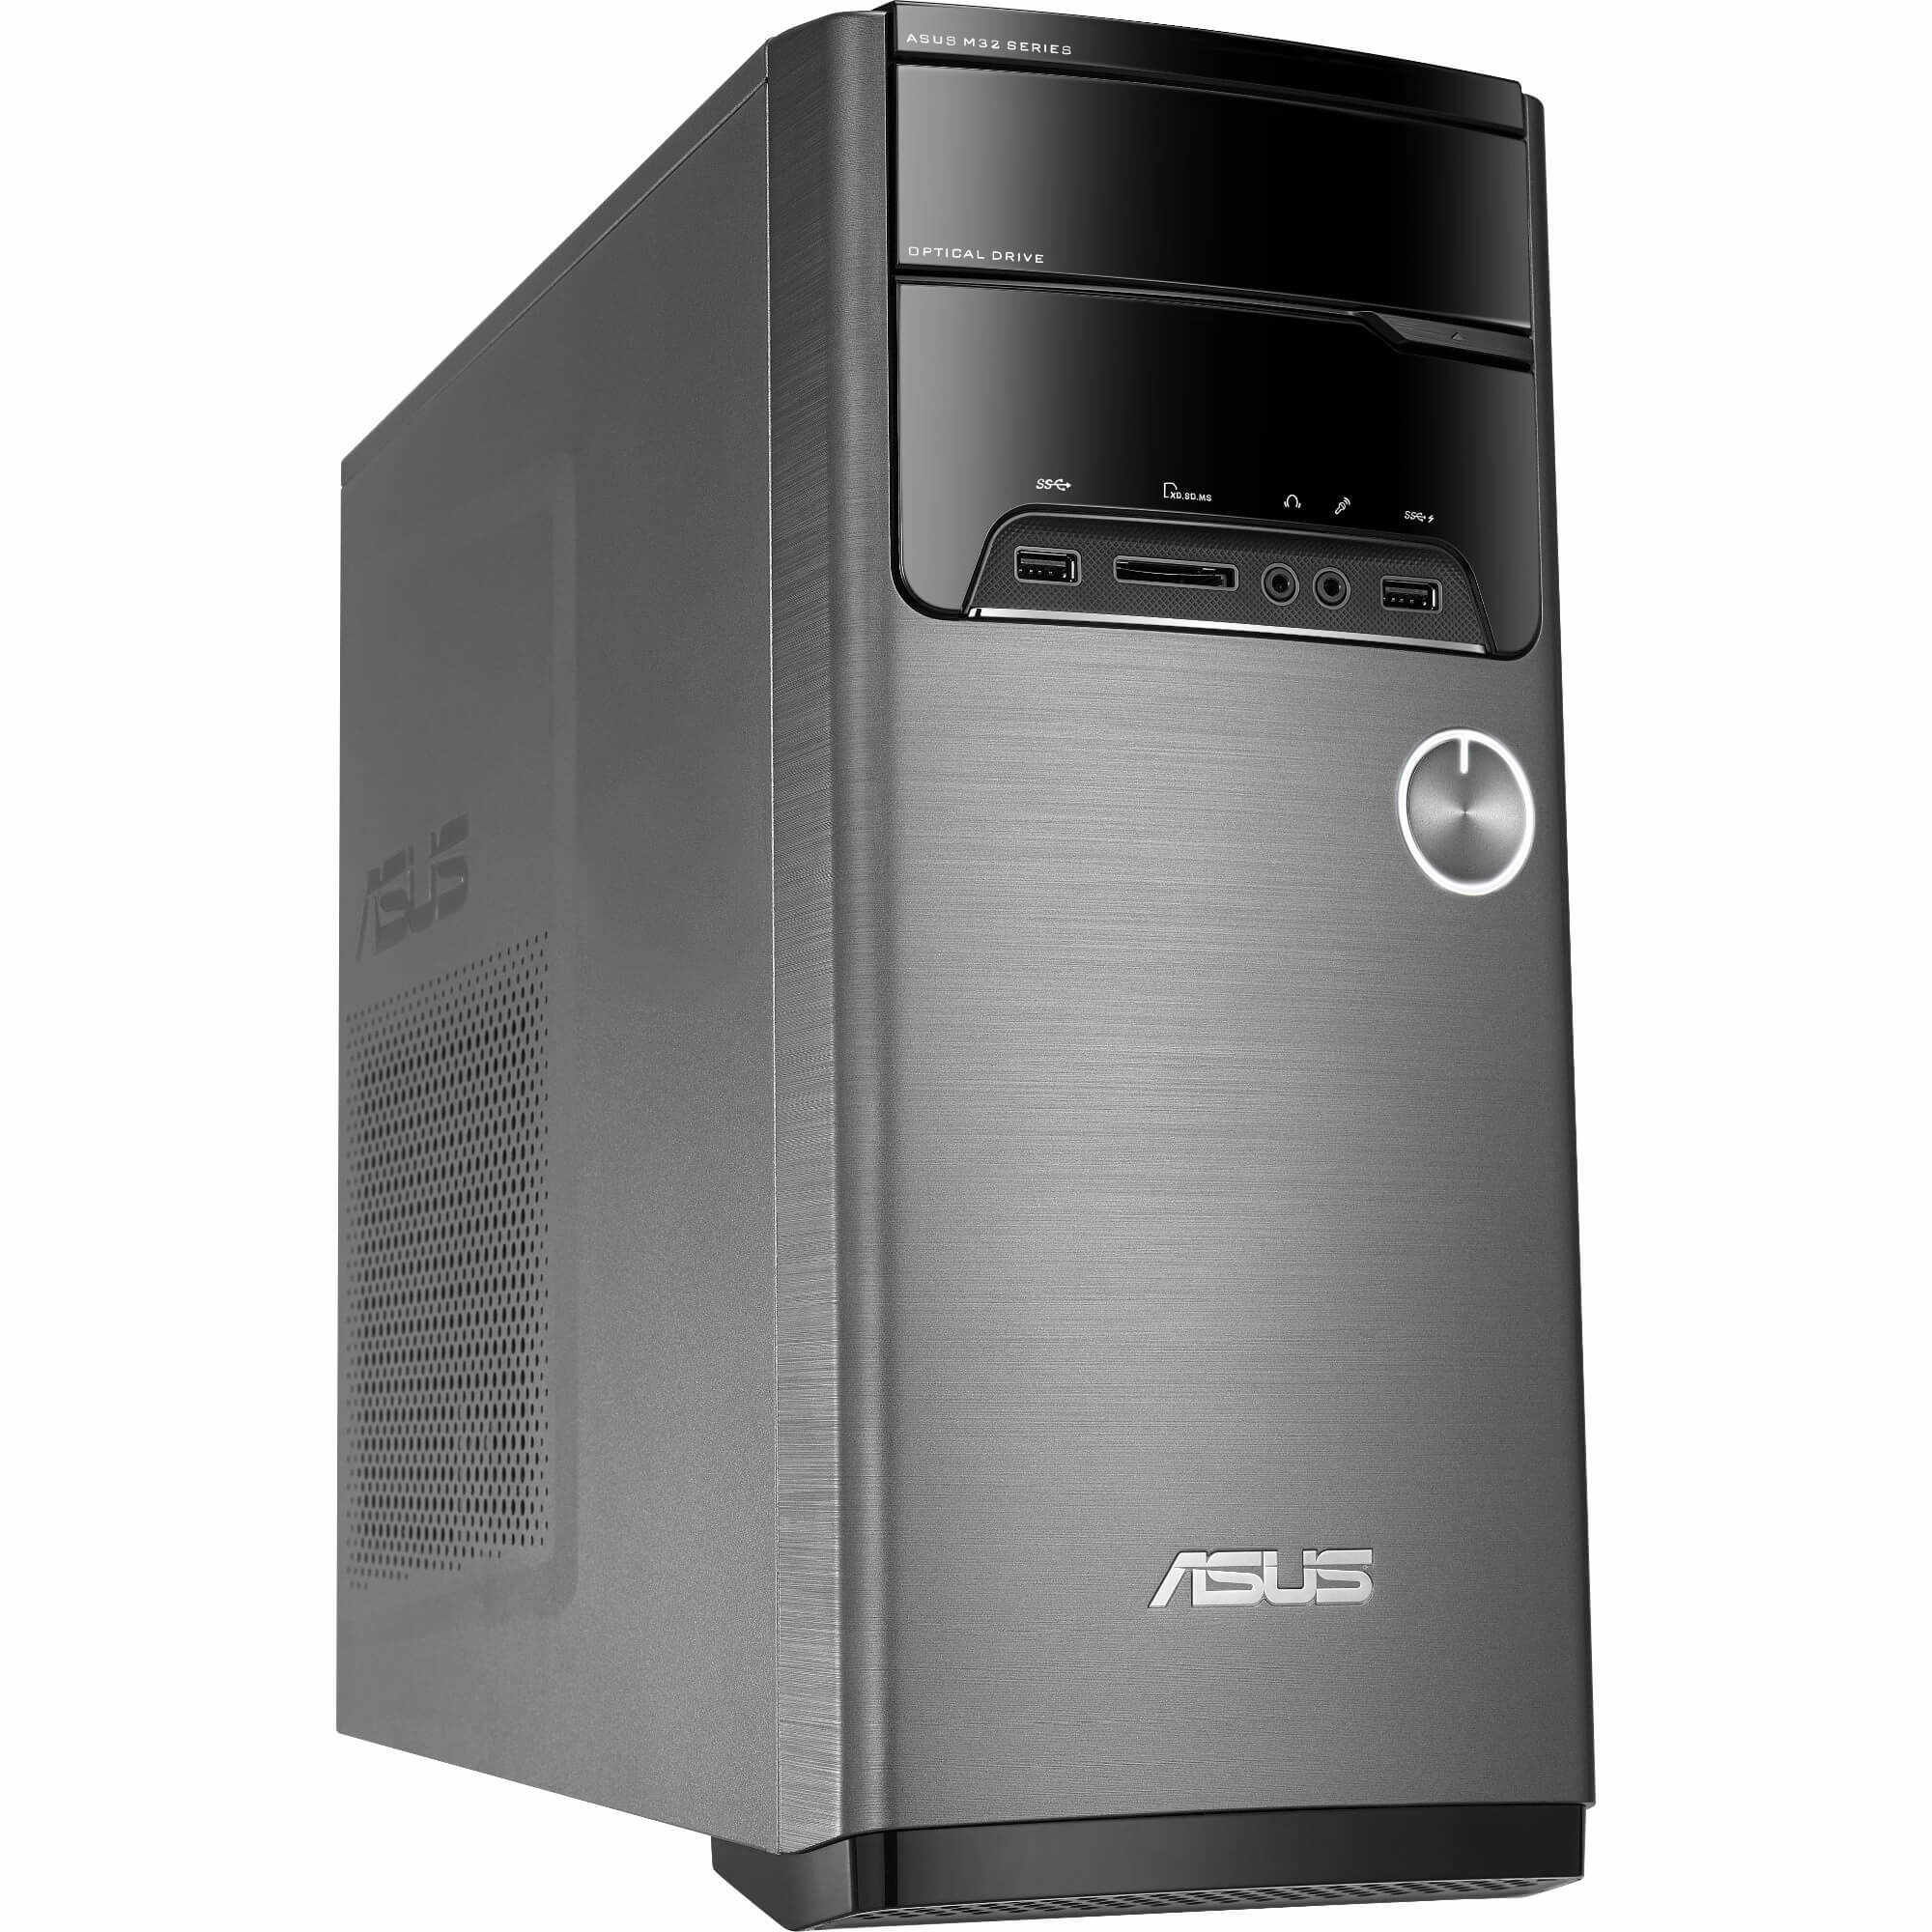 Sistem Desktop PC ASUS M32CD-RO033D, Intel Core i3-6100, 4GB DDR4, HDD 1TB, AMD Radeon R7 340 2GB, Free DOS